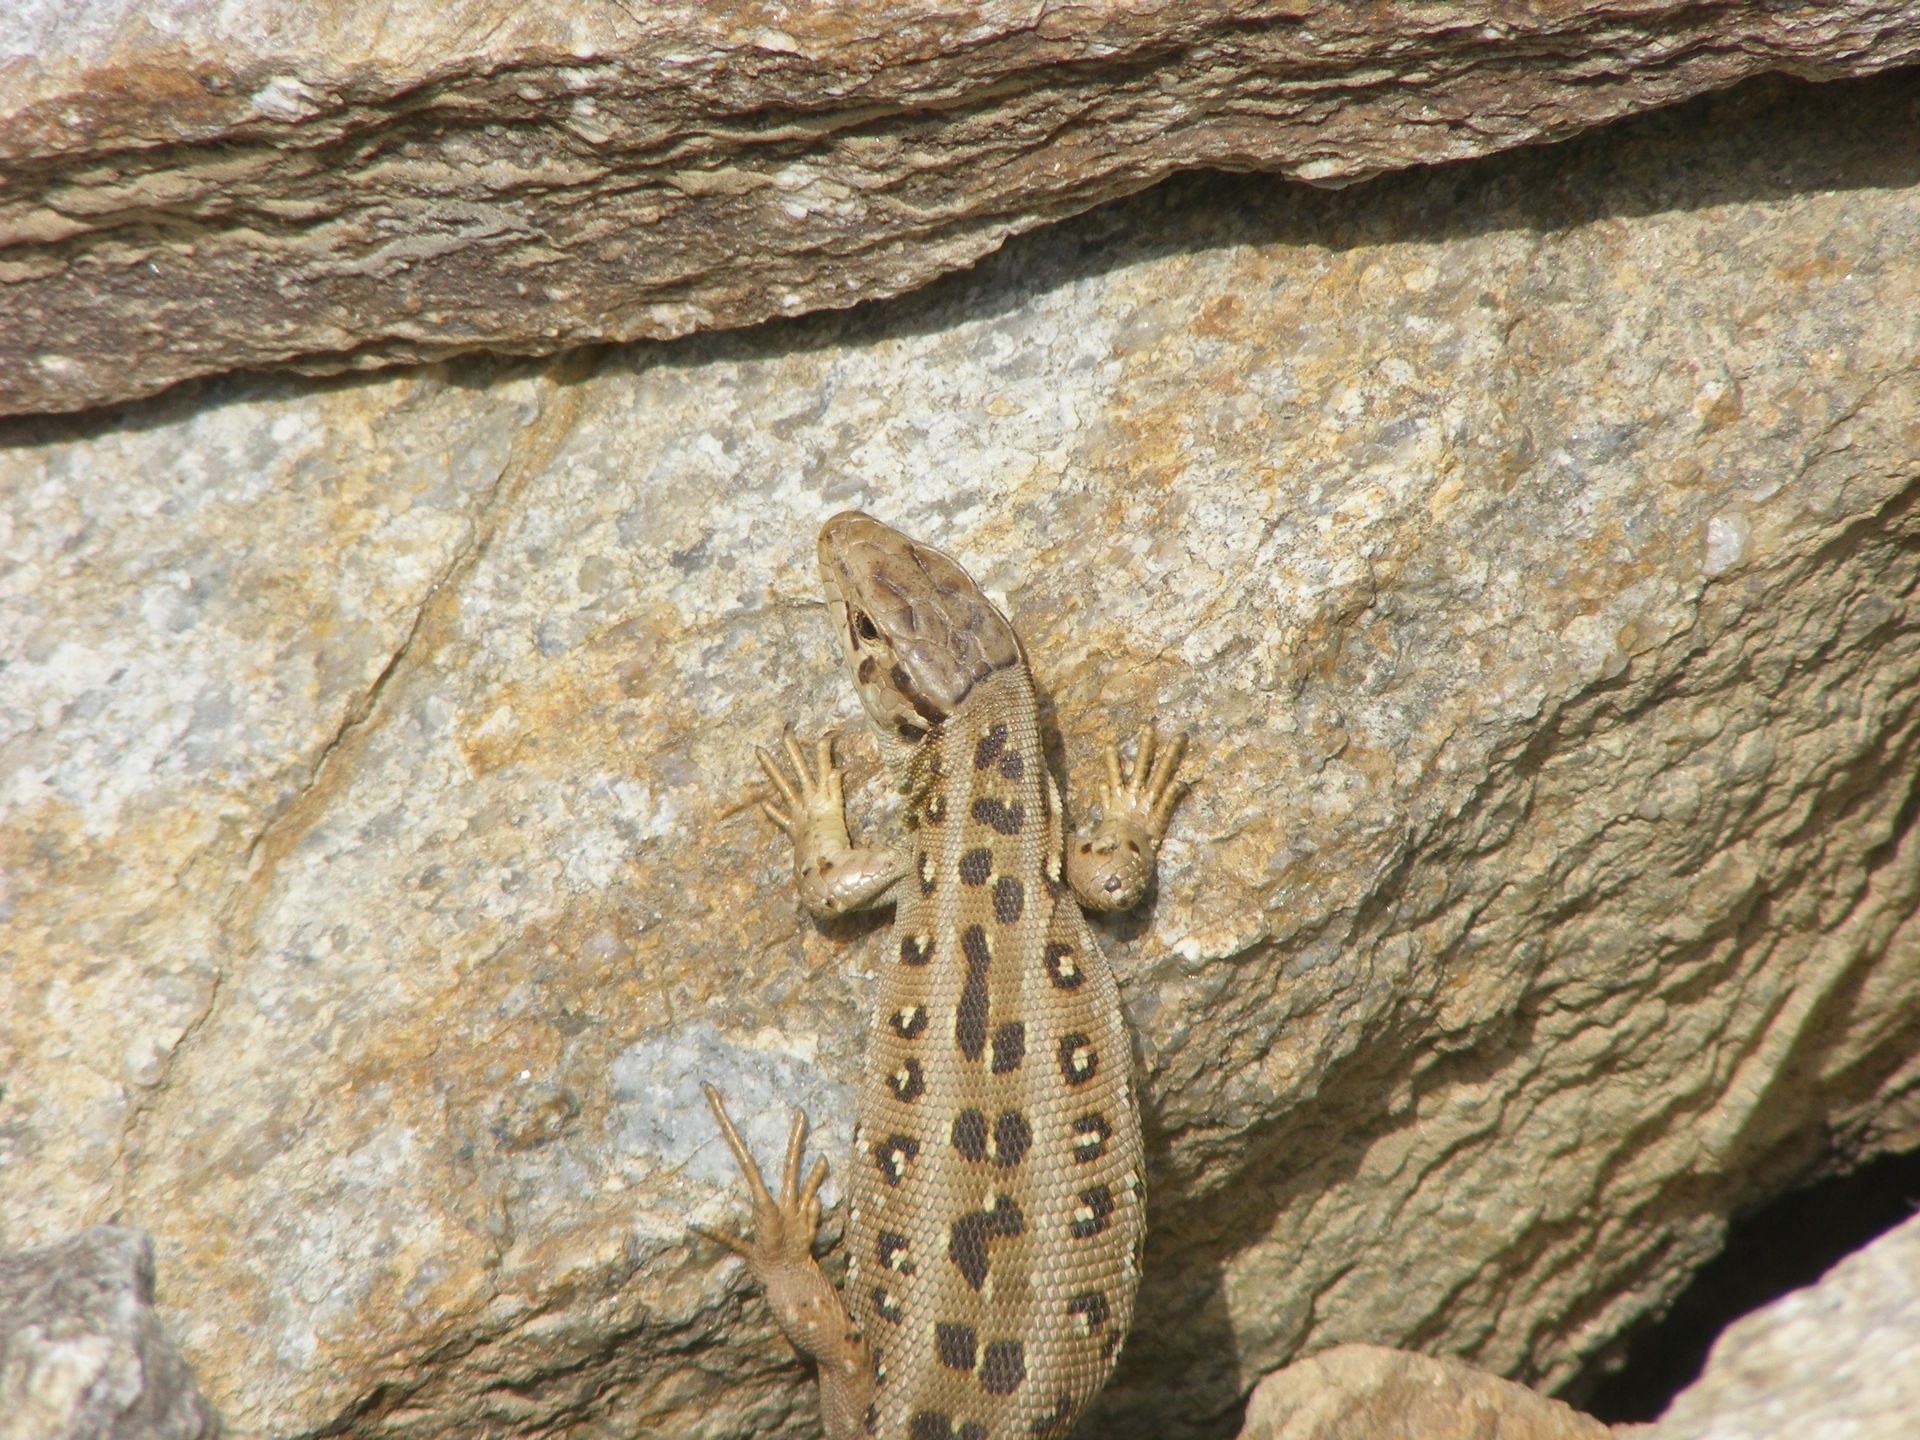 brown and beige lizard